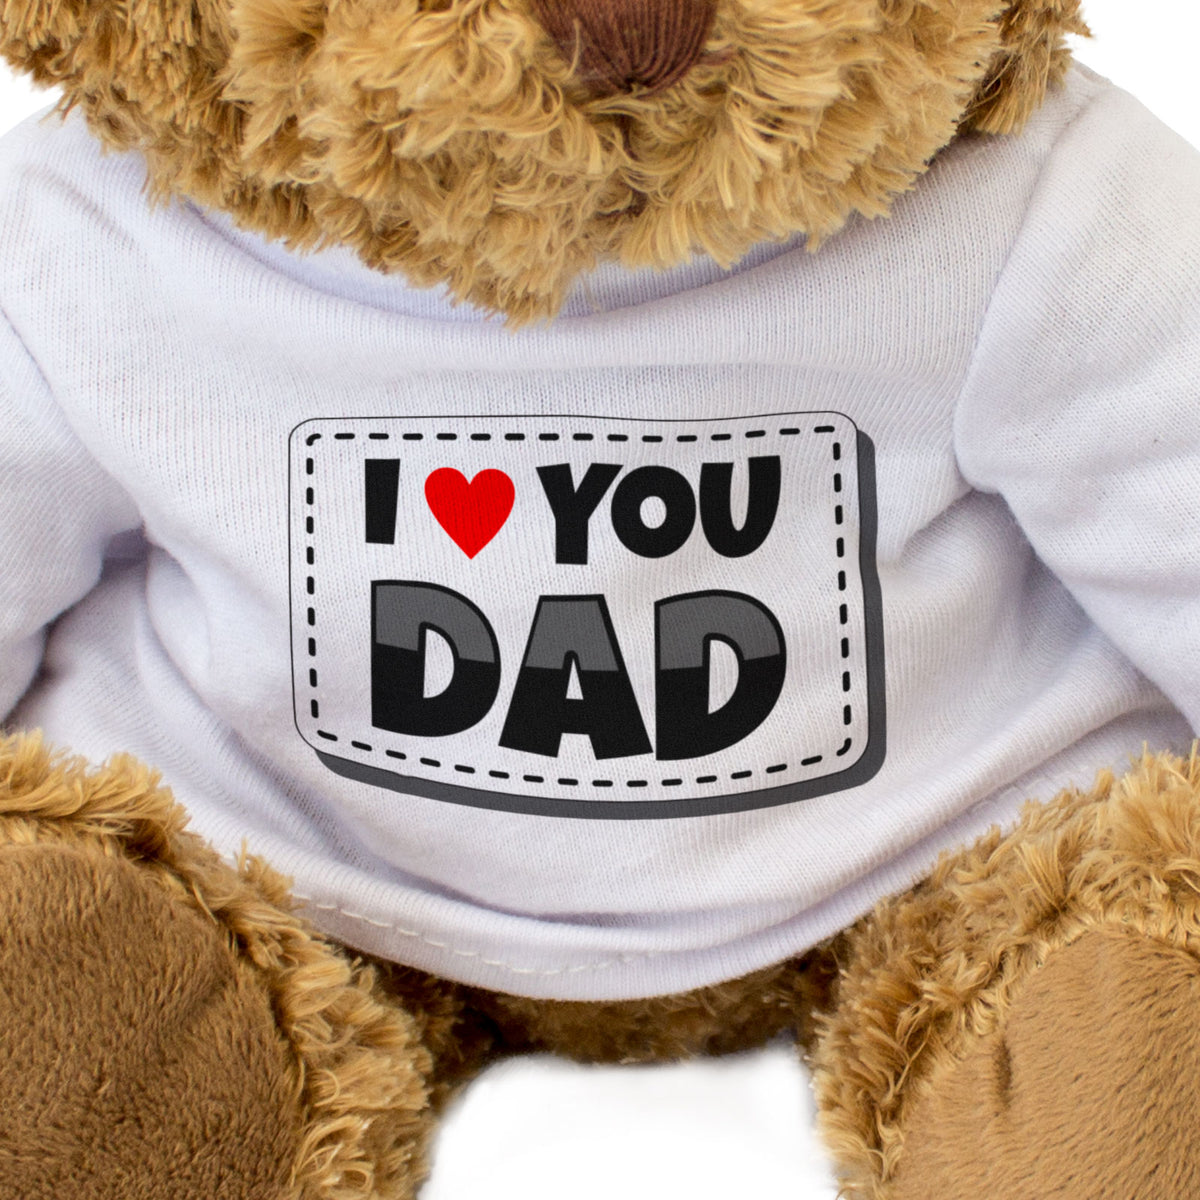 I Love You Dad - Teddy Bear - Gift Present